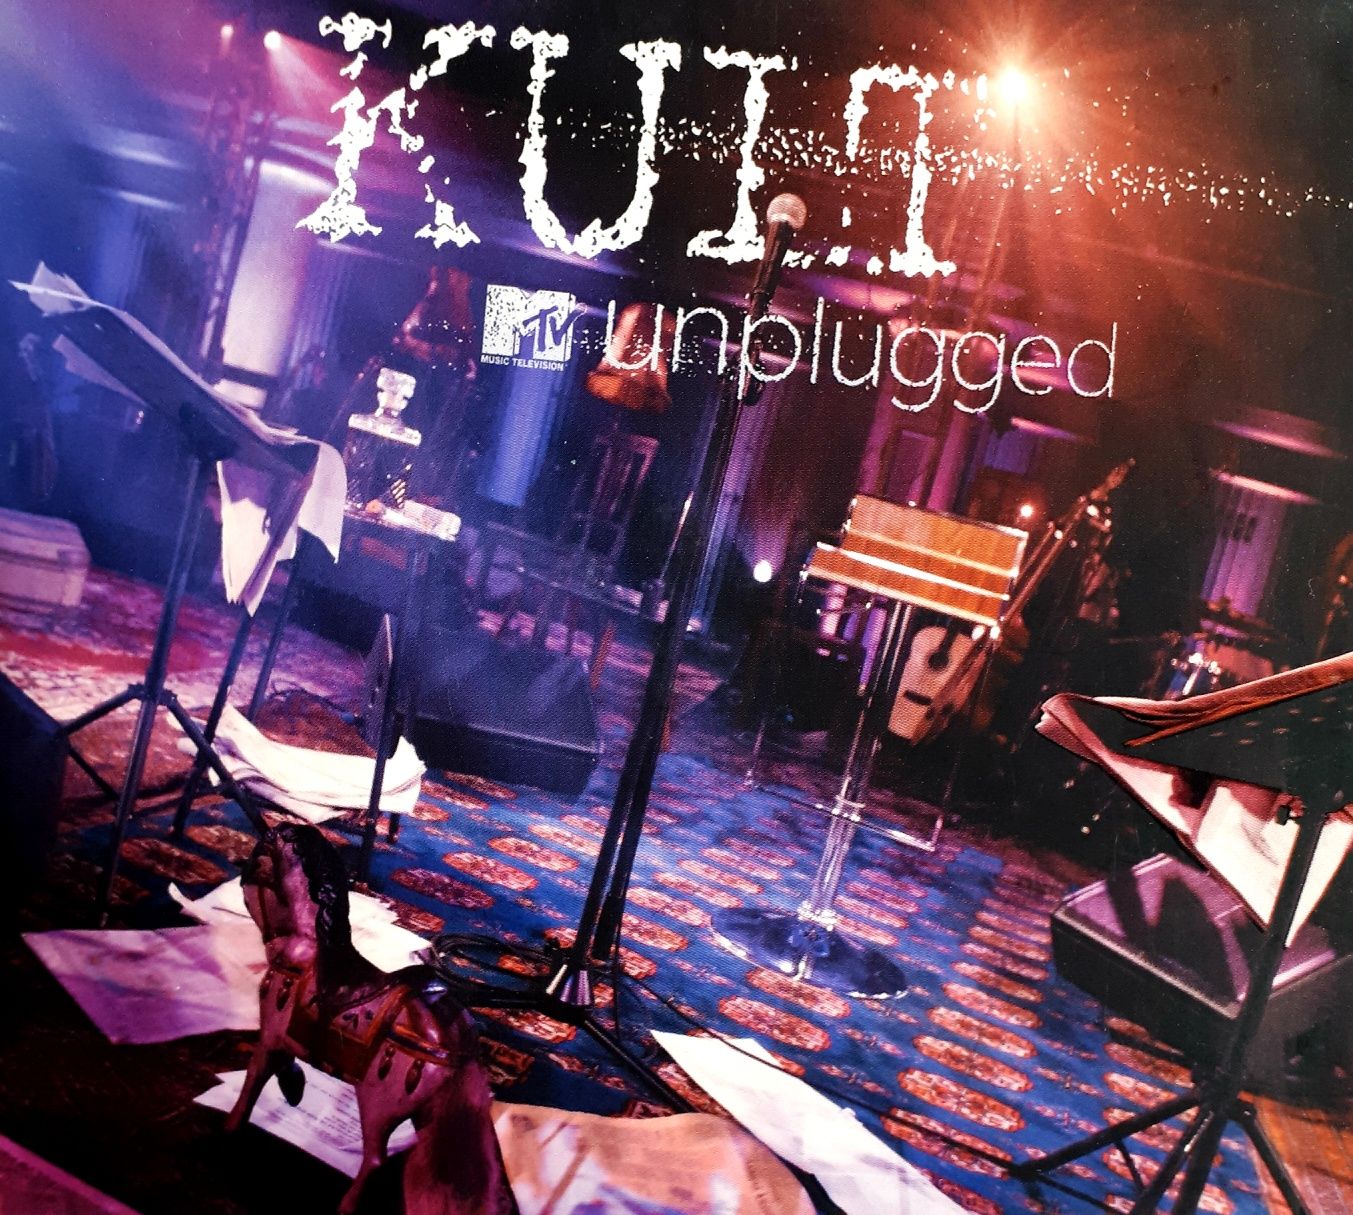 Kult MTV Unplugged 2CD+DVD 2010r